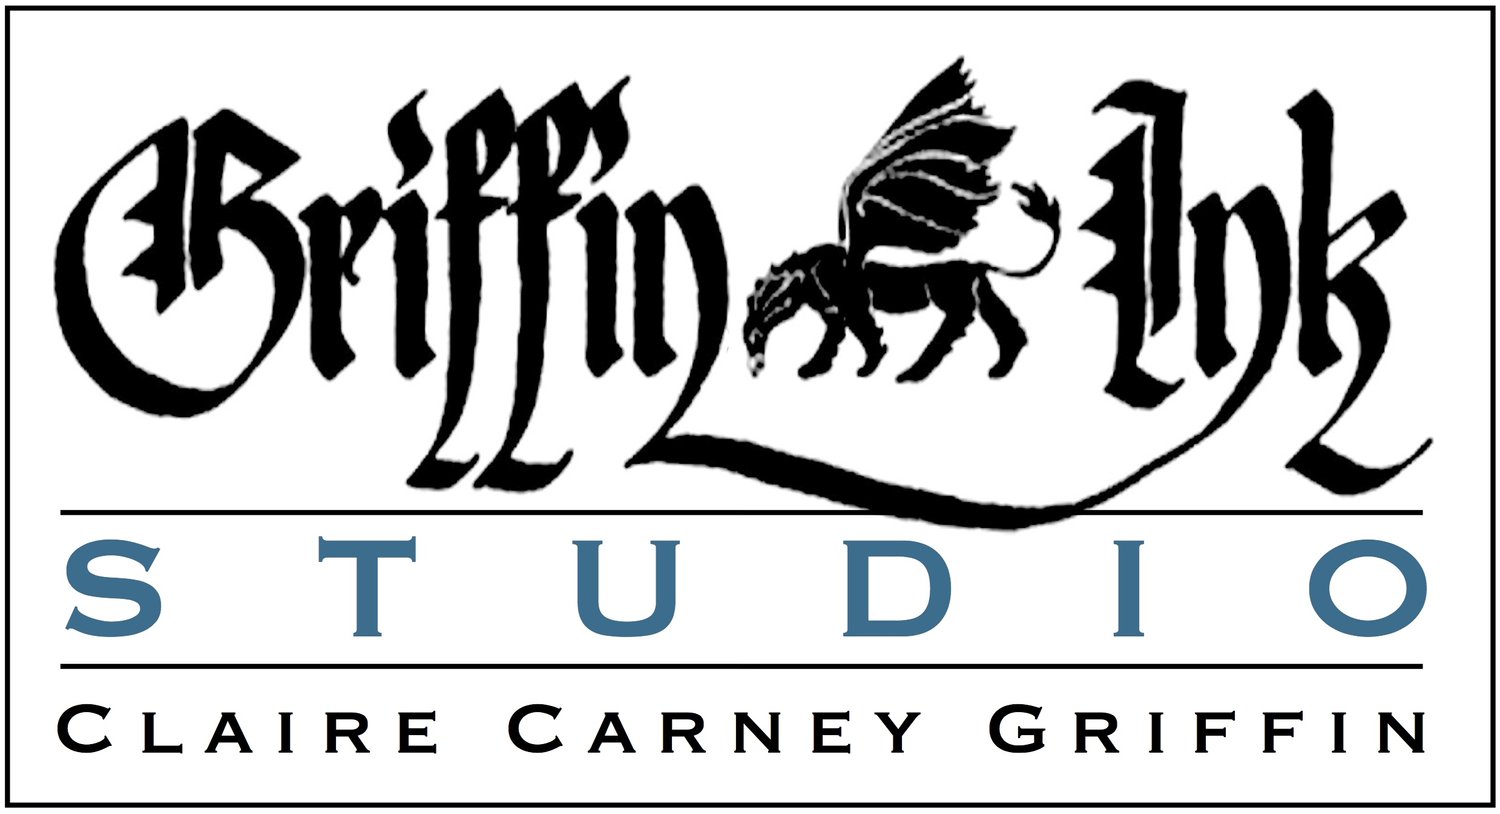 Griffin Ink Studio